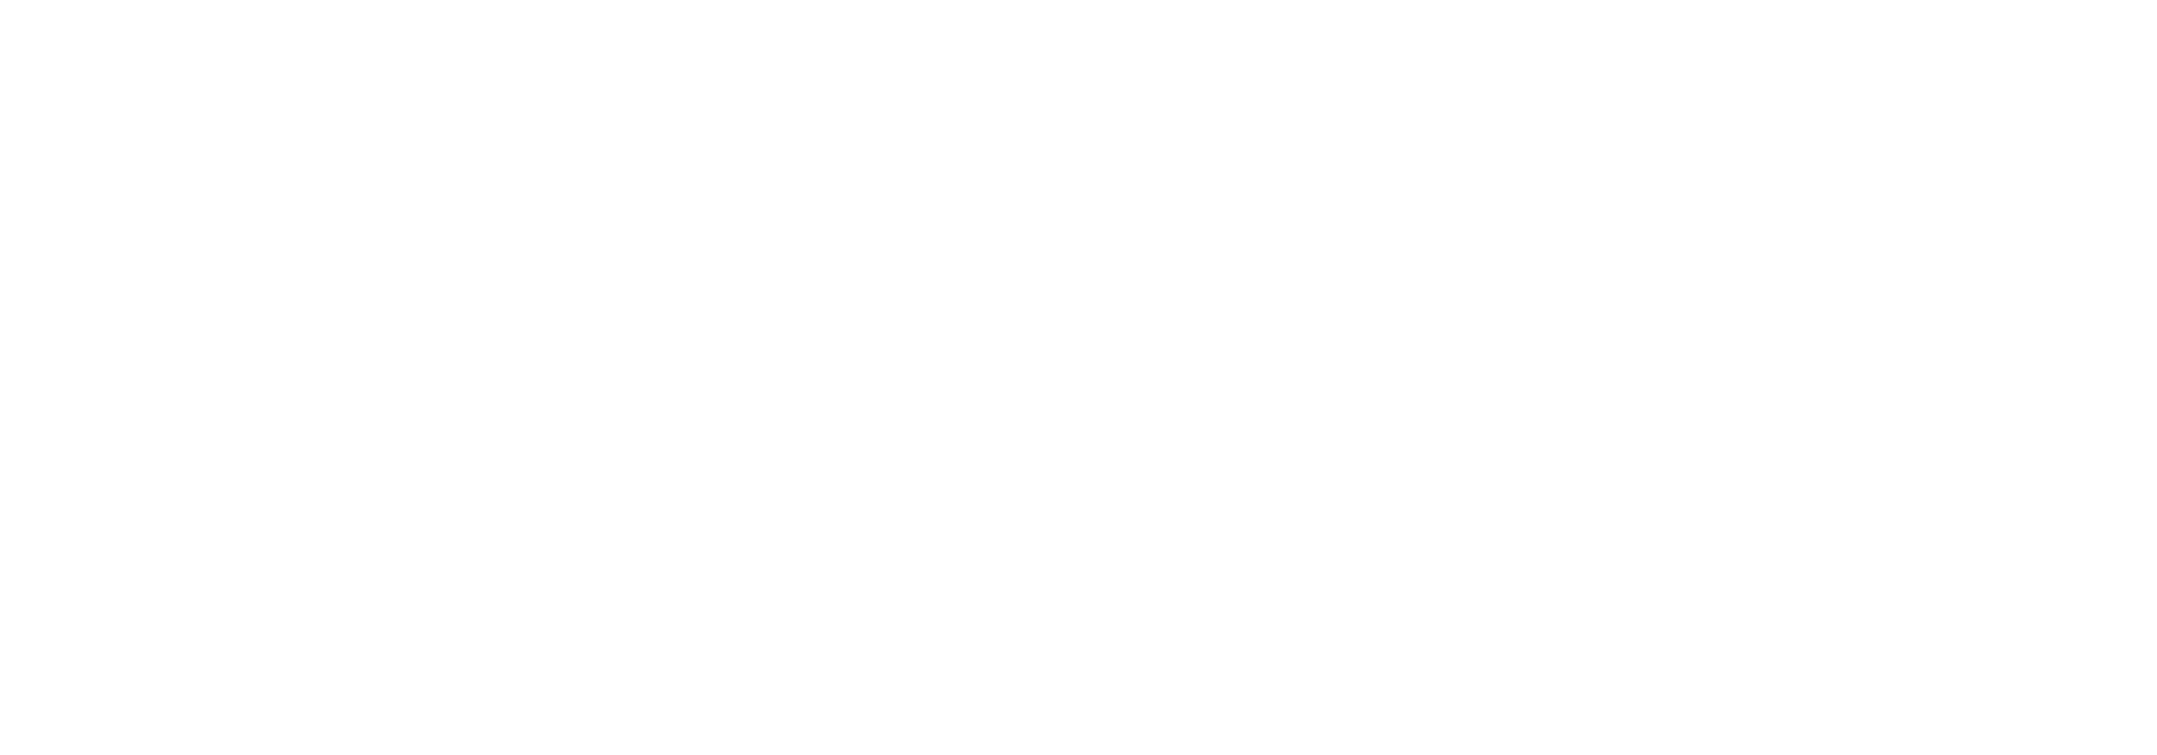 First Responder's Coffee Company